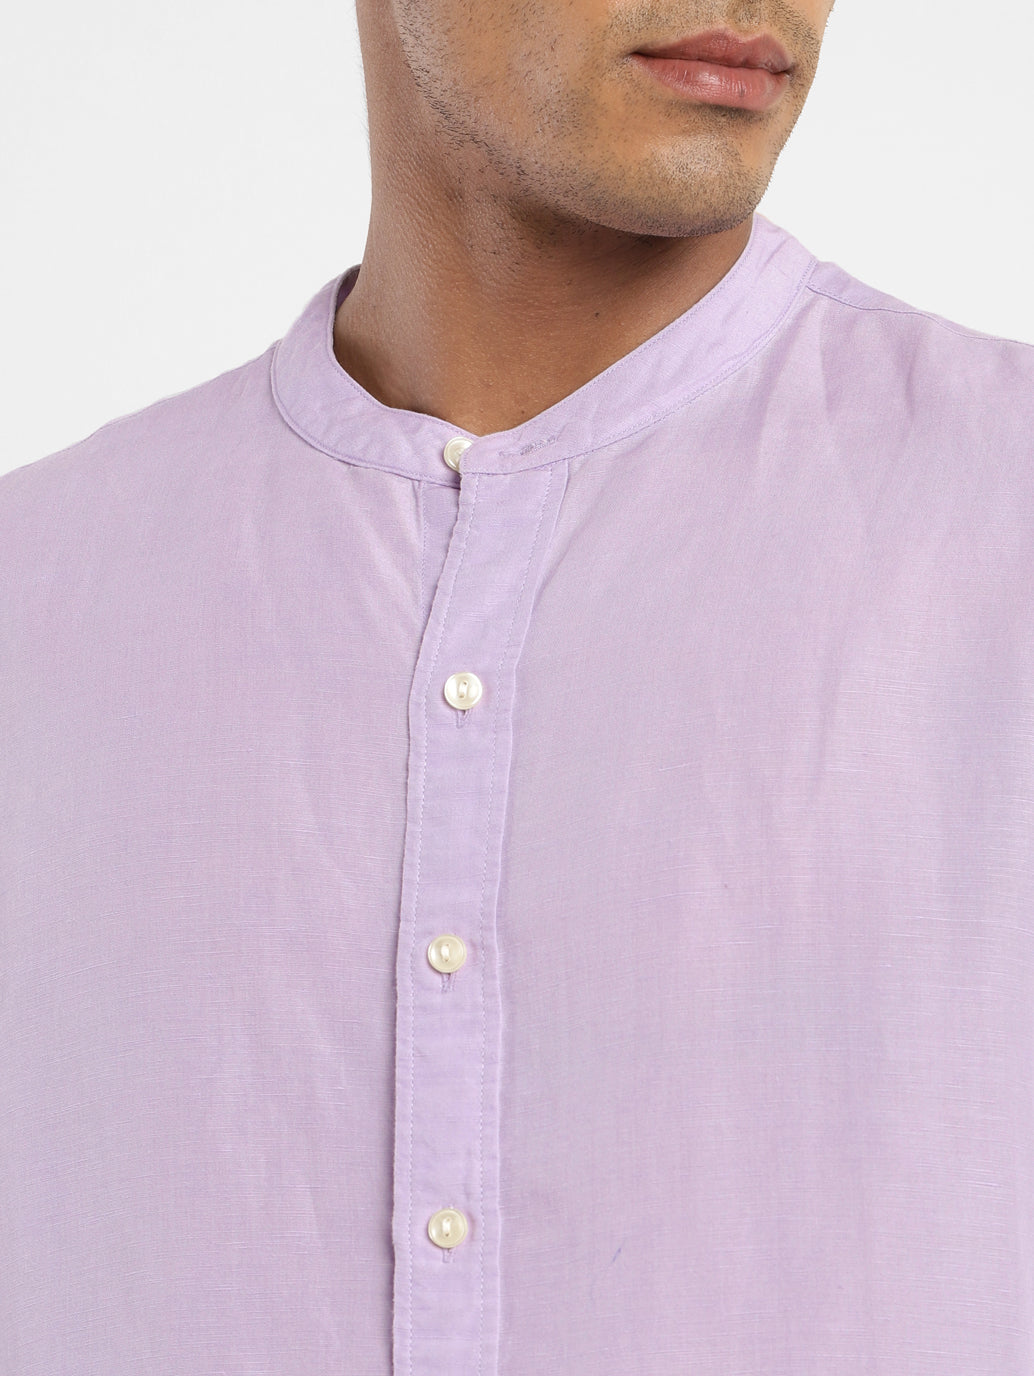 Men's Solid Band Neck Linen Shirt